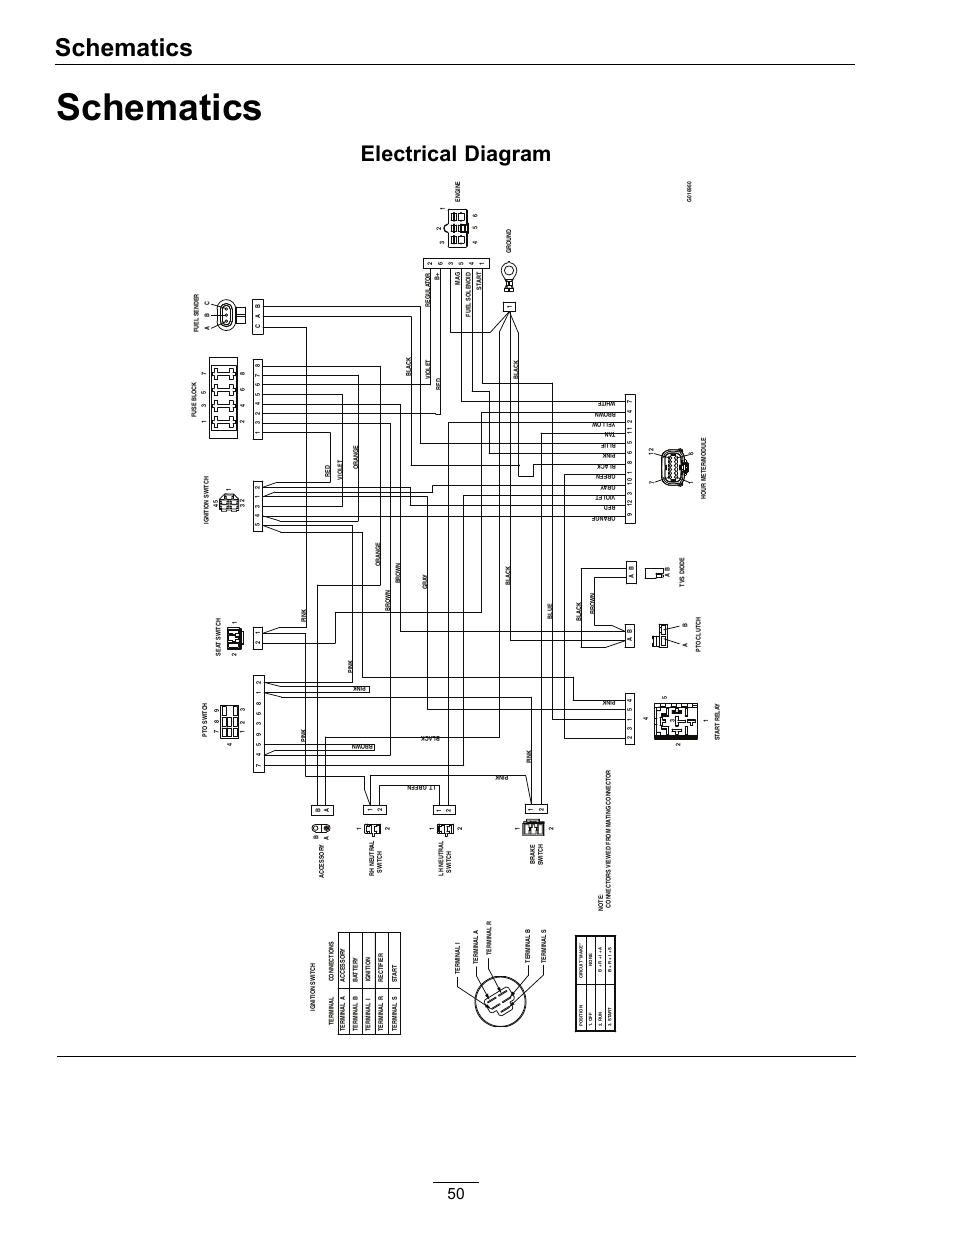 4540sl ignition system wiring diagram